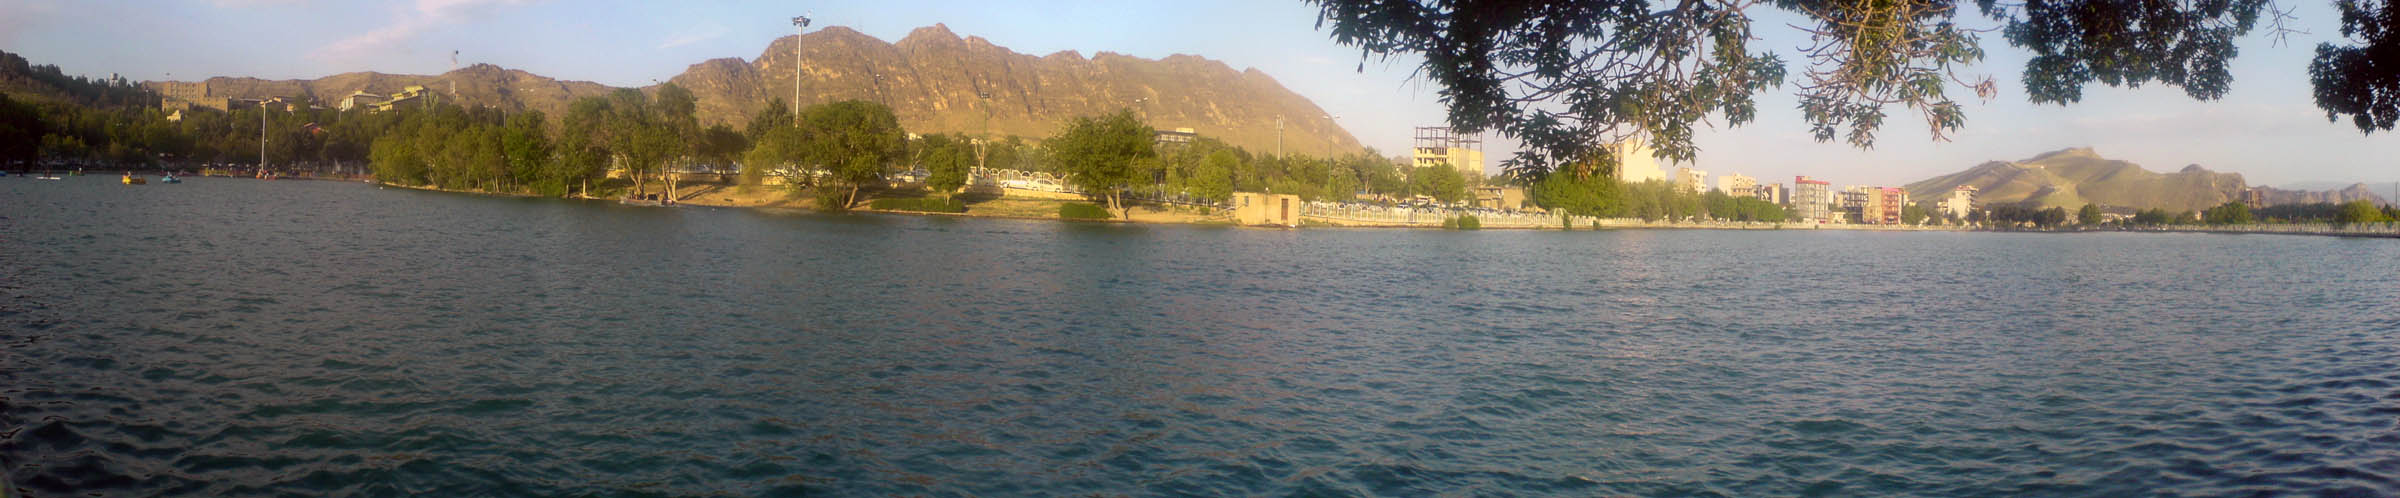 Kiau_Lake_Panorama_Reza.jpg